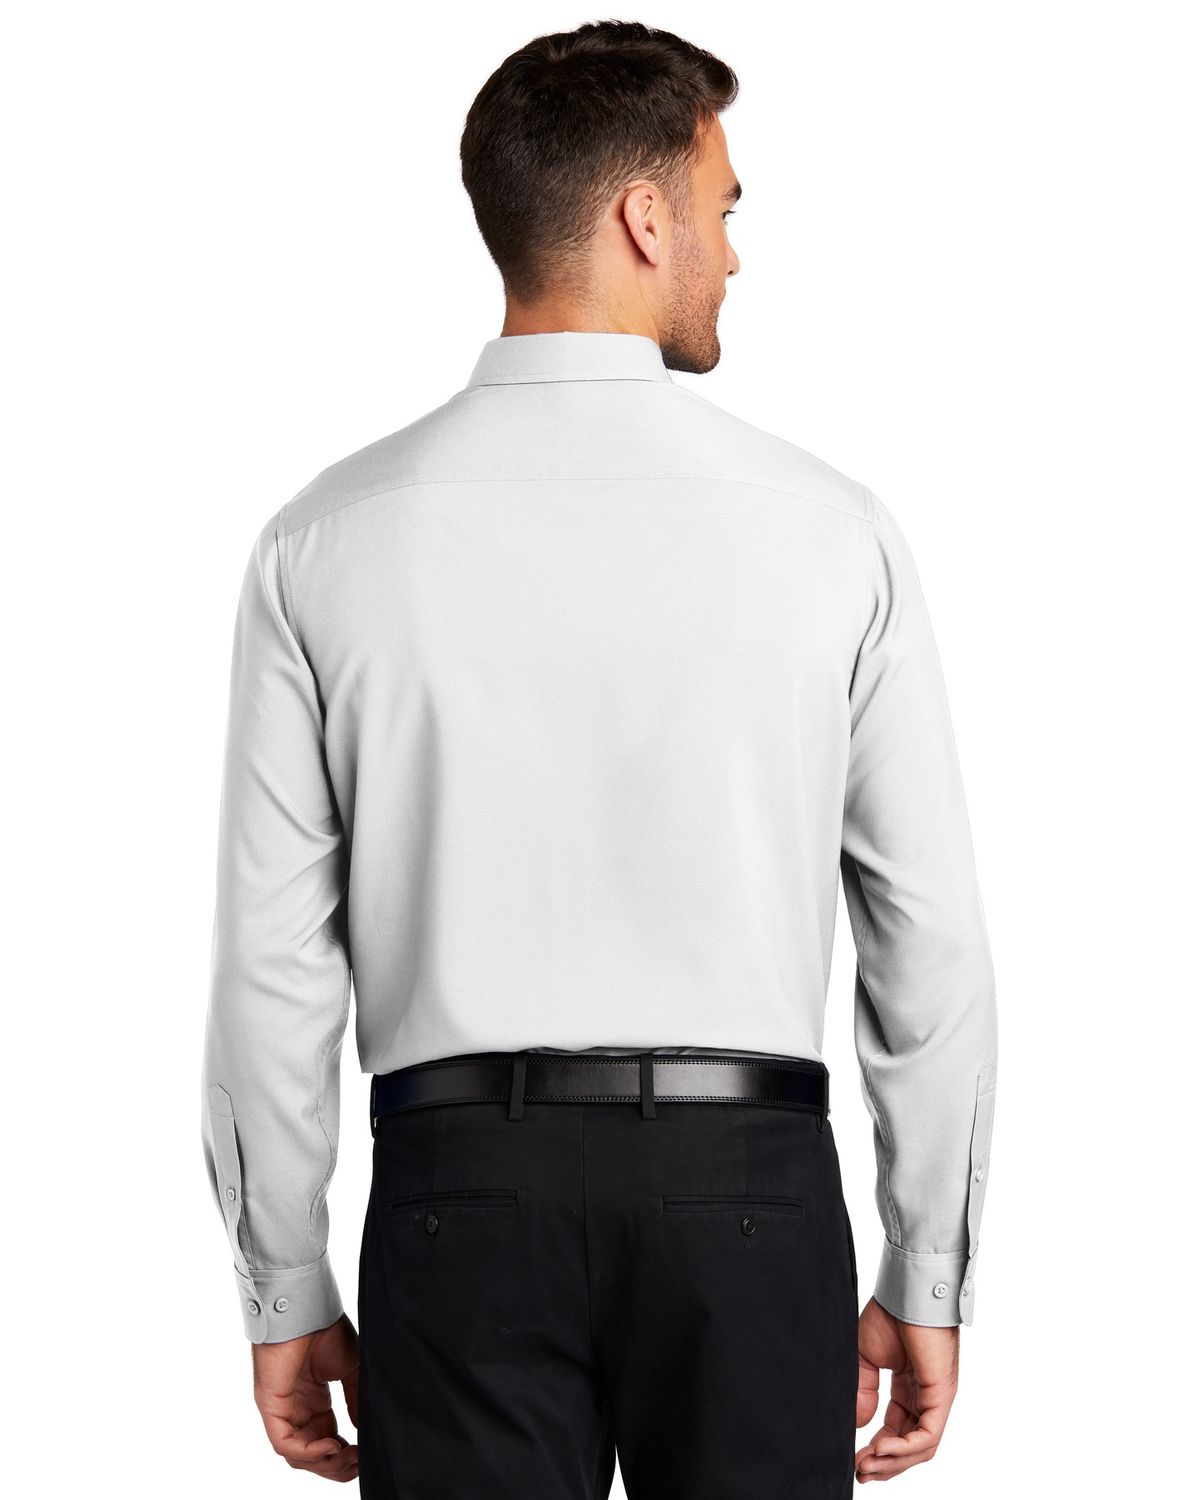 'Port Authority W401 Long Sleeve Performance Staff Shirt'